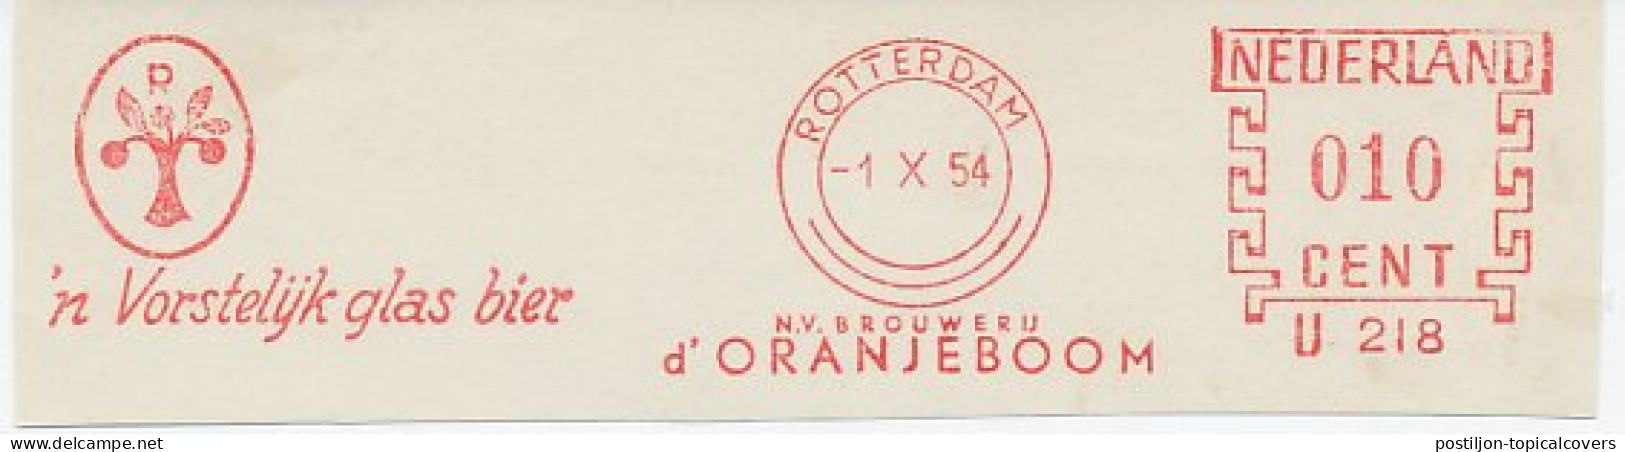 Meter Cut Netherlands 1954 Beer - Brewery D Oranjeboom - Wines & Alcohols